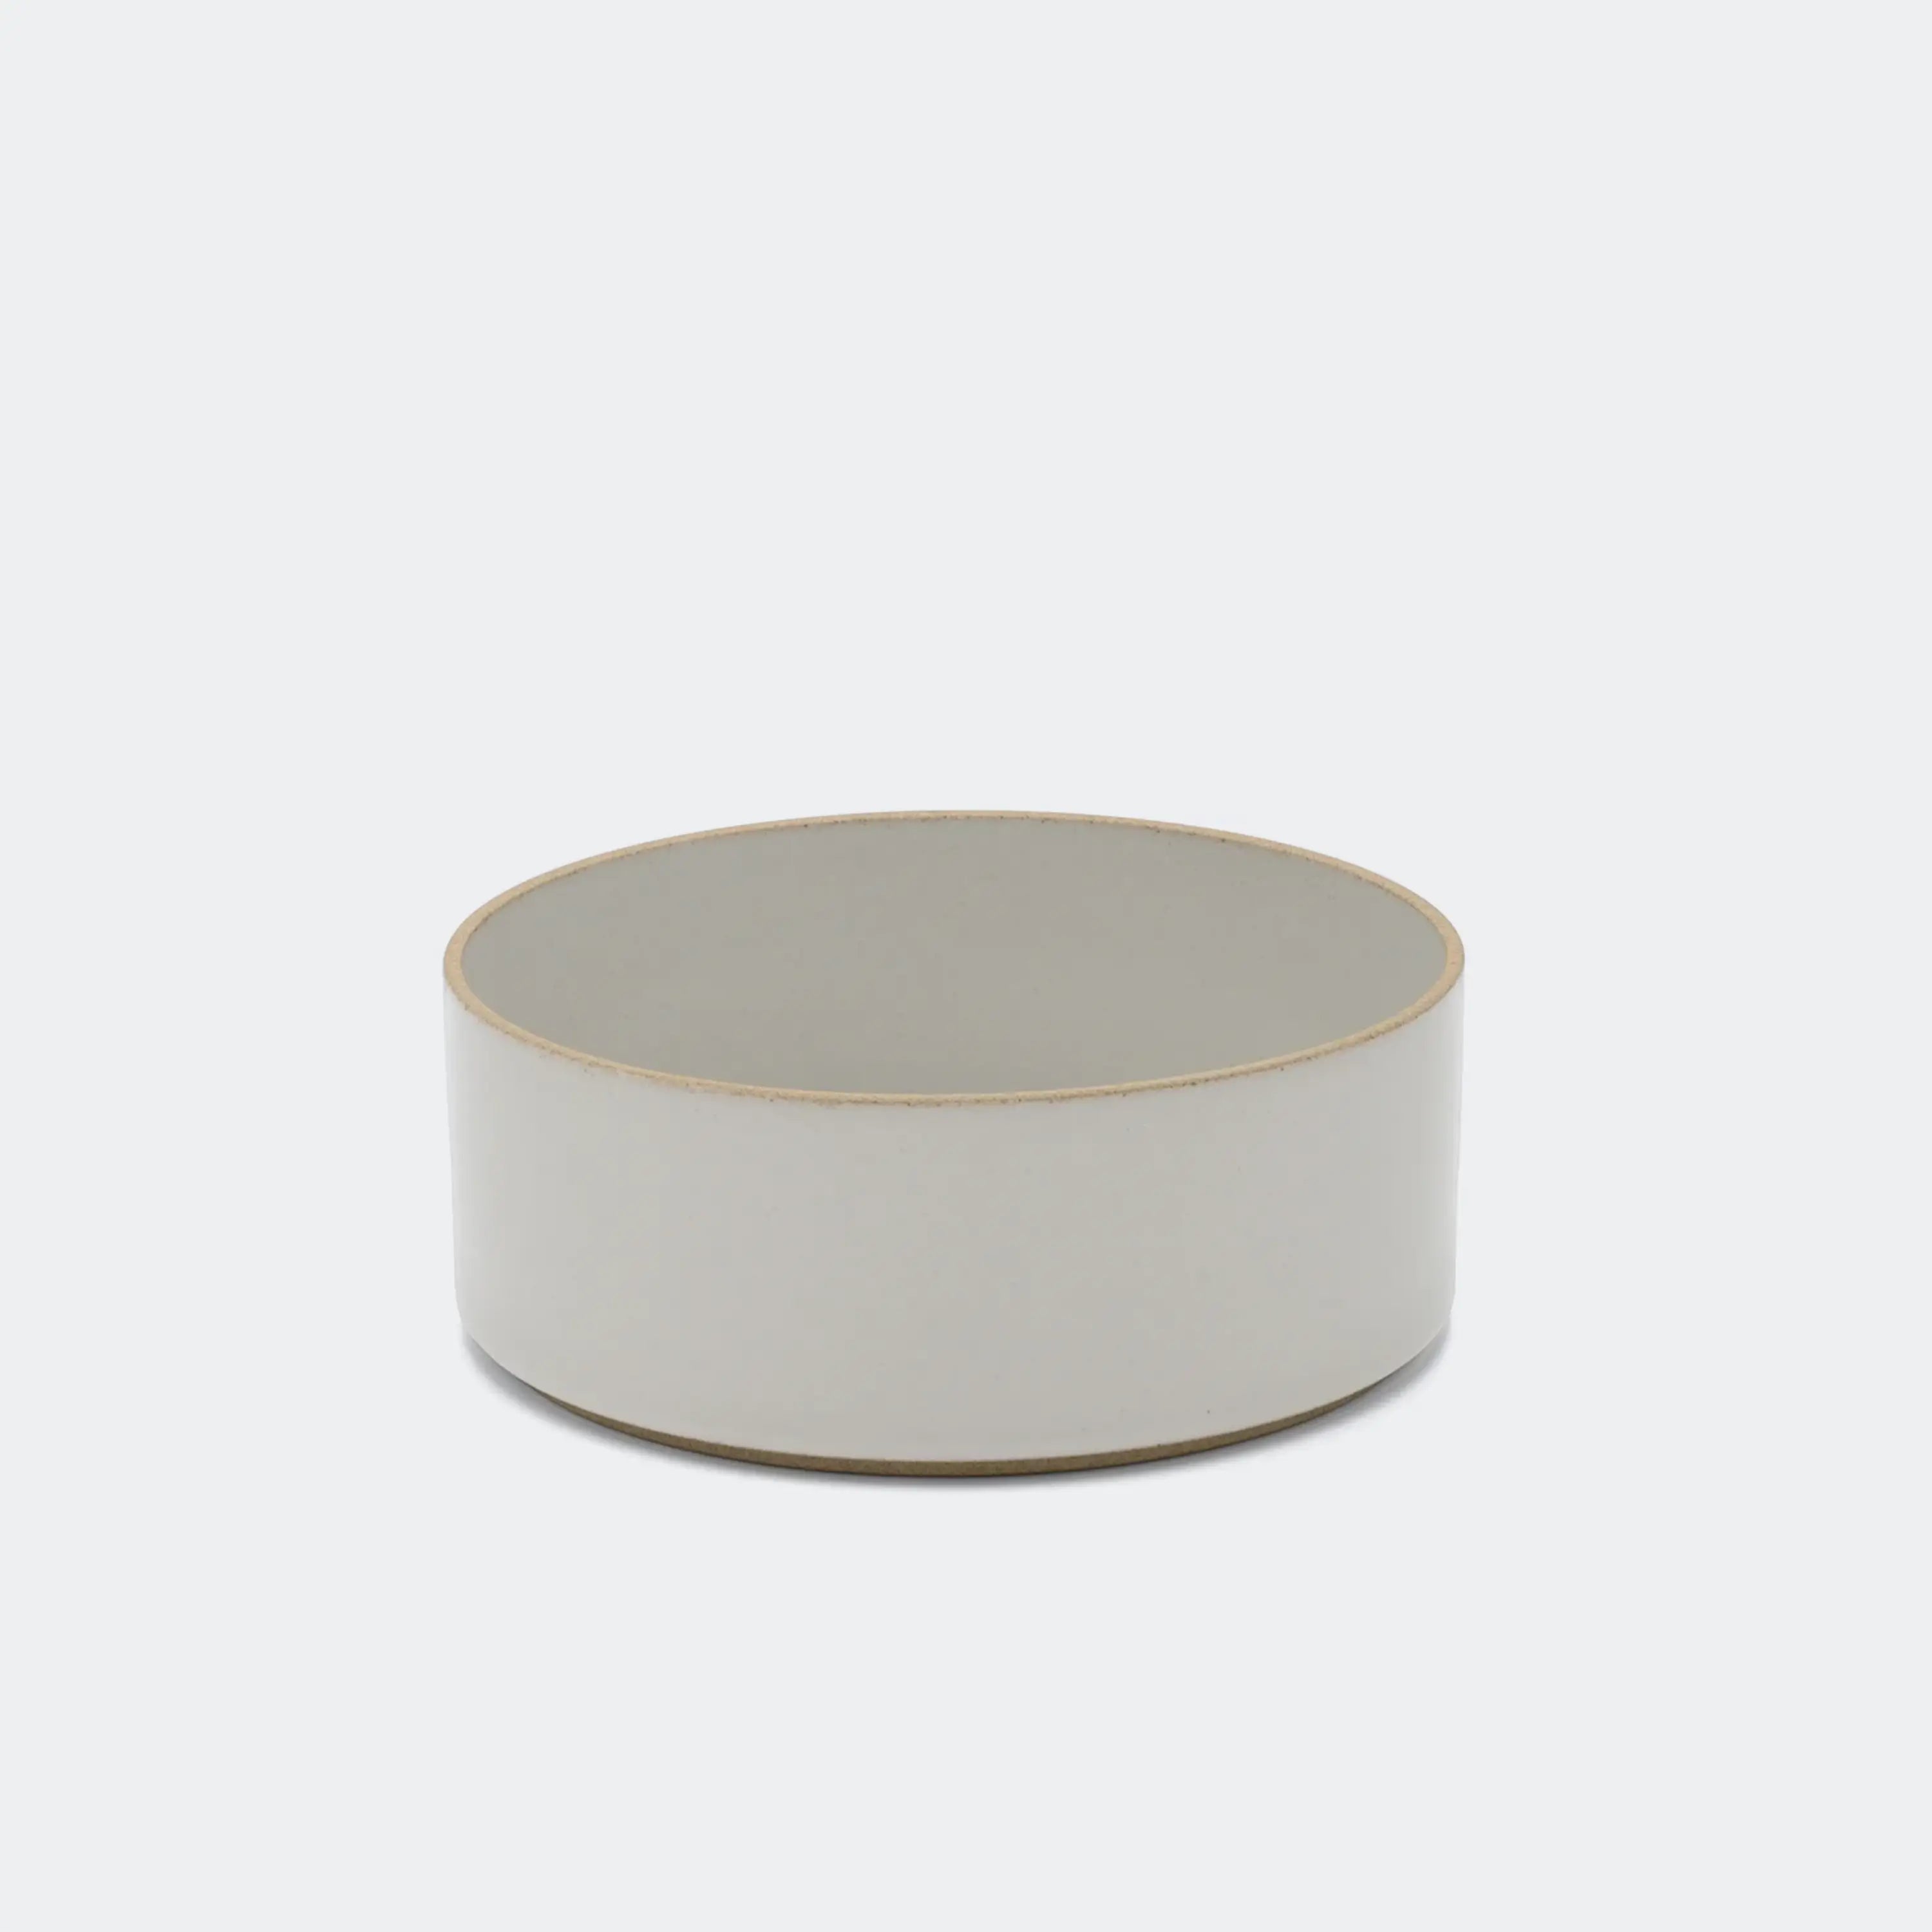 Hasami Porcelain Hasami Porcelain Tall Bowl in Gloss Gray 7.25" - KANSO#Size_7.25"